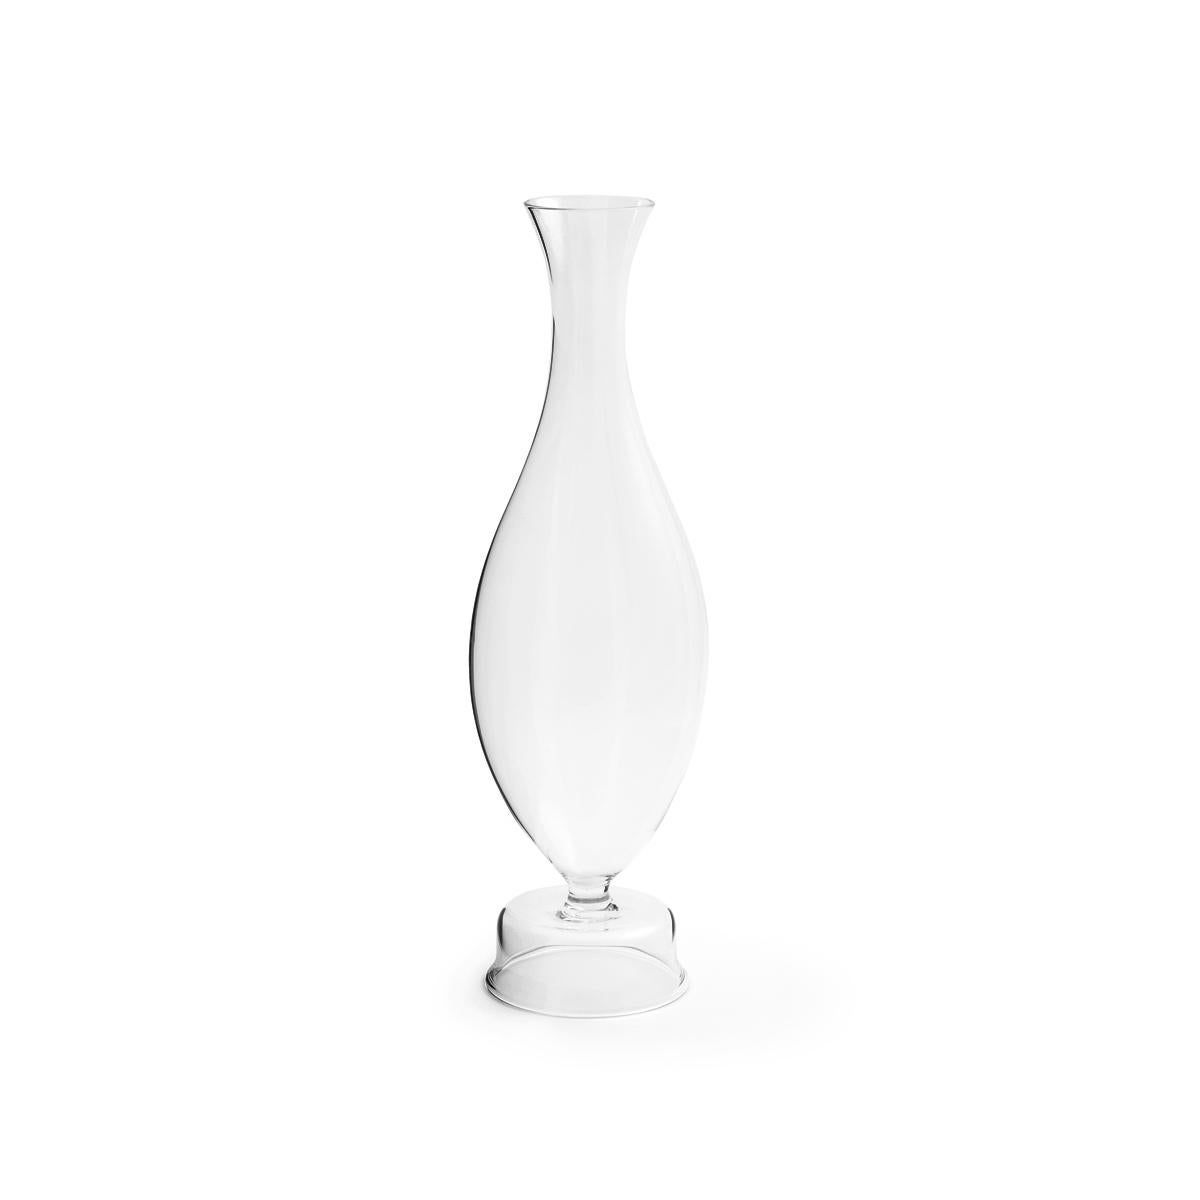 Modern Pims Mouth-Blown Glass Bottle / Vase Designed by Aldo Cibic